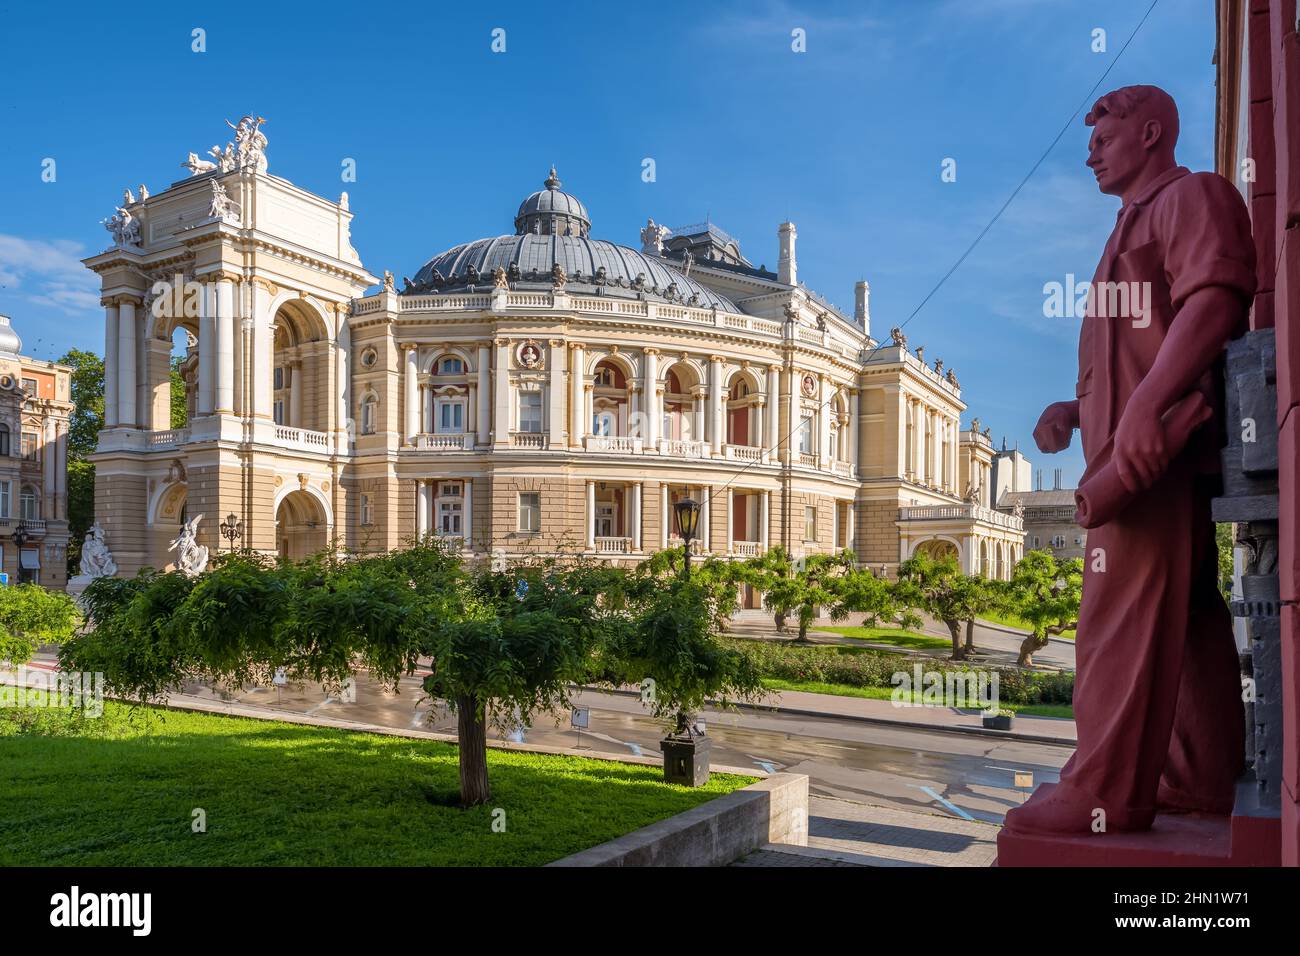 Building of the opera and ballet theatre and soviet era statue in Odessa, Ukraine Stock Photo